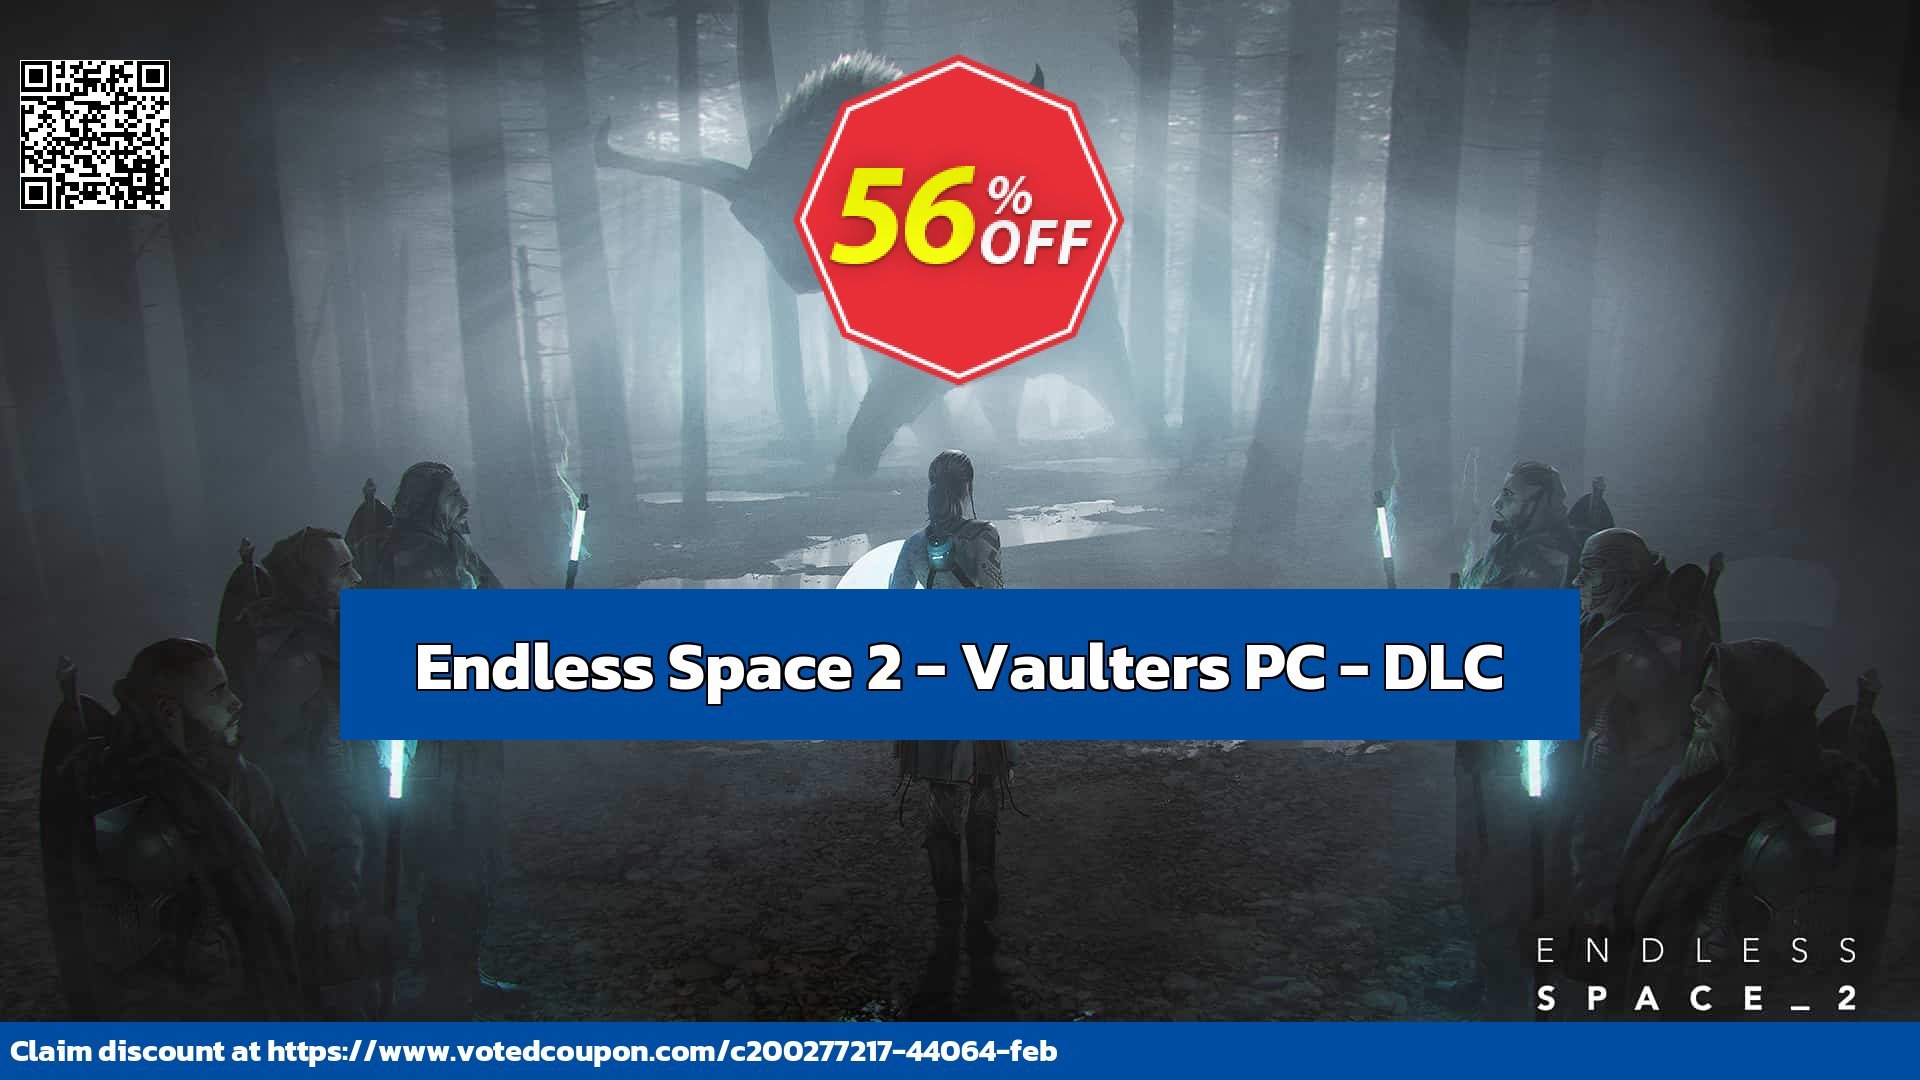 Endless Space 2 - Vaulters PC - DLC Coupon, discount Endless Space 2 - Vaulters PC - DLC Deal CDkeys. Promotion: Endless Space 2 - Vaulters PC - DLC Exclusive Sale offer